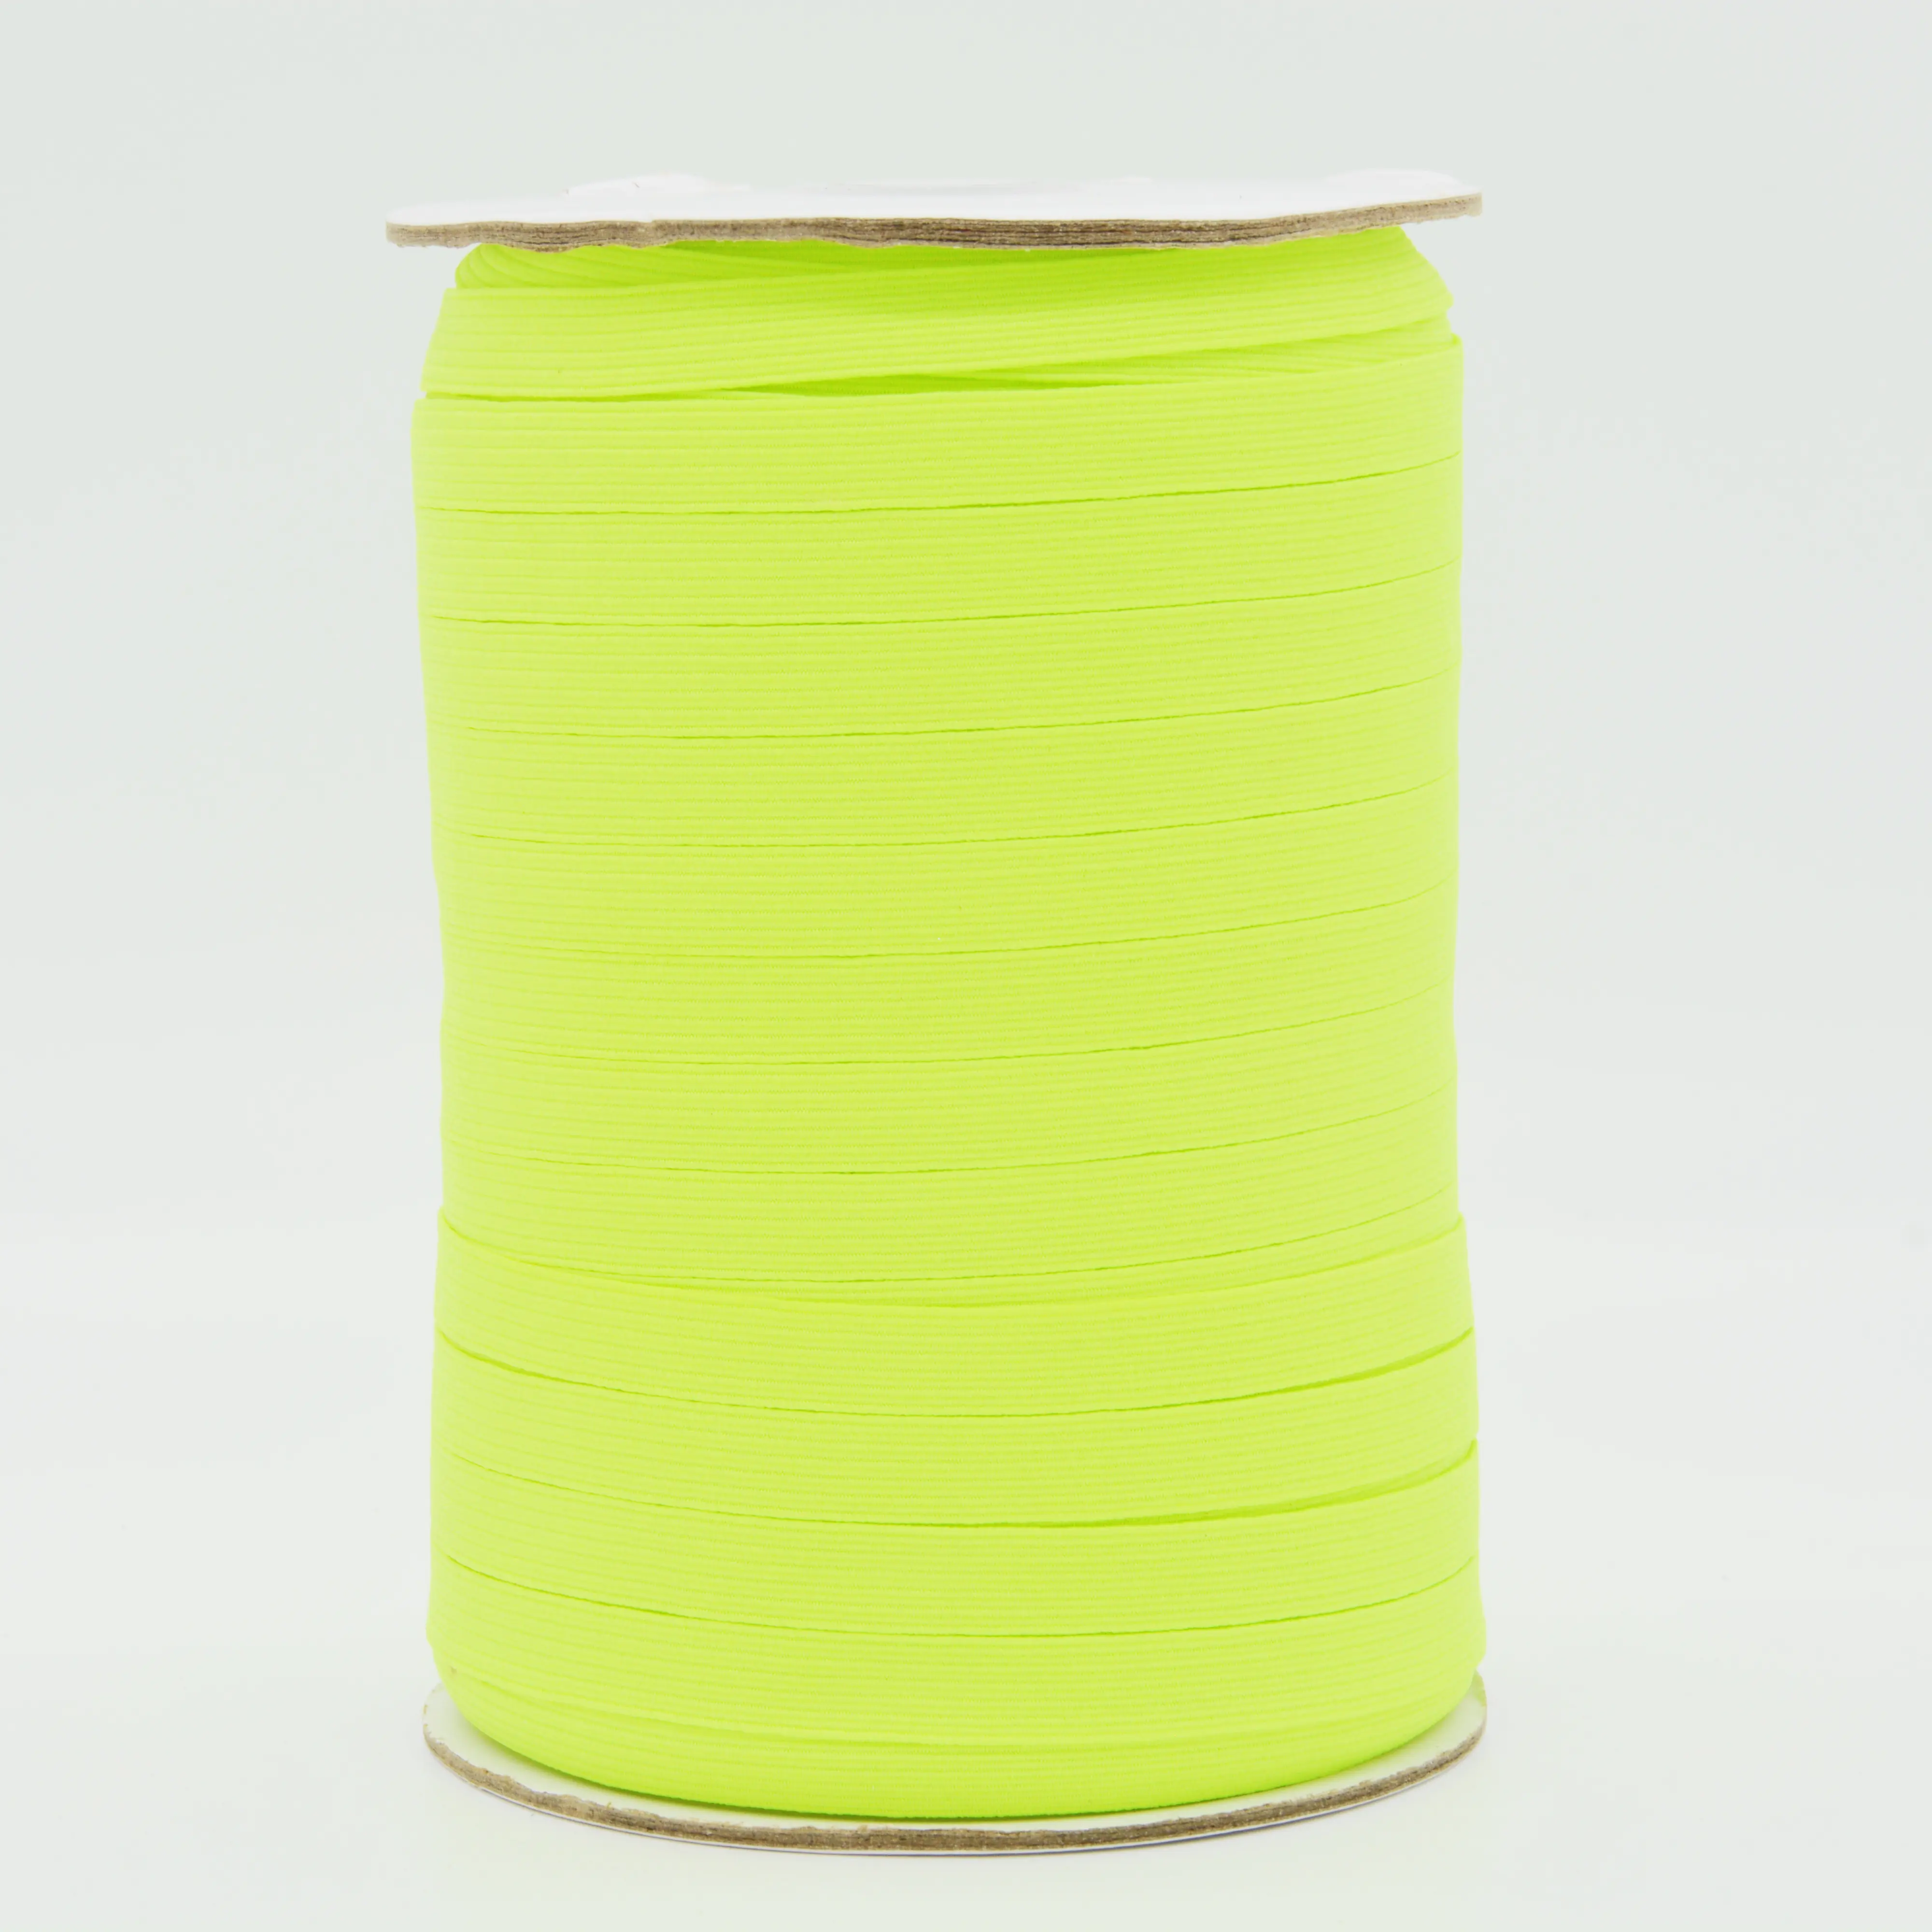 10mm High elasticity colored woven simple plain elastic band for belt straps webbing strap webbing elastic webbing